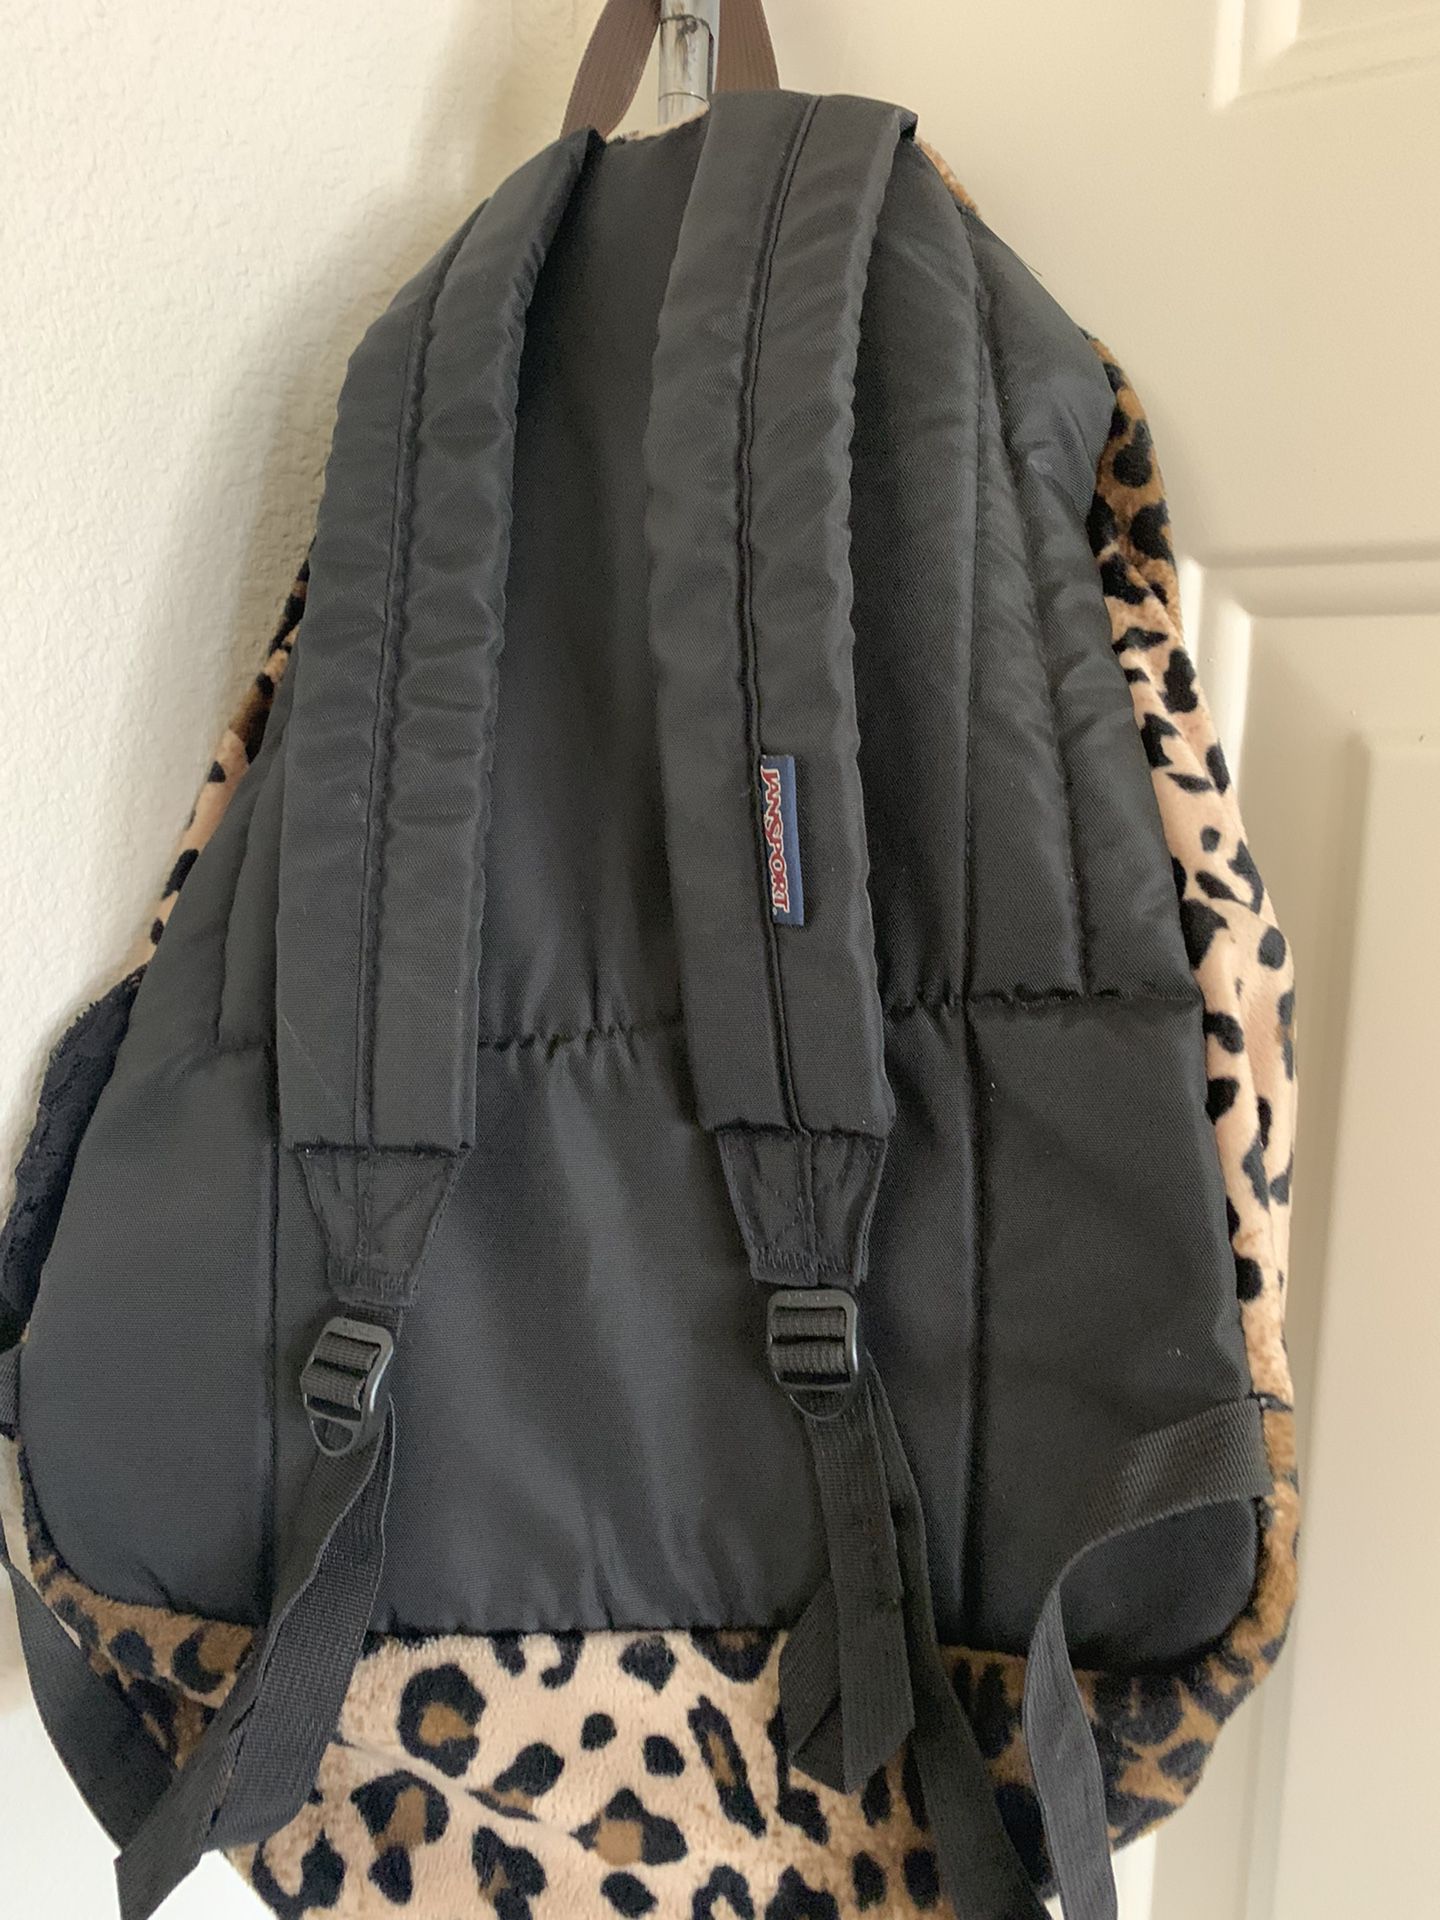 Cheetah Print Jansport Backpack for Sale in Lindsay, CA - OfferUp